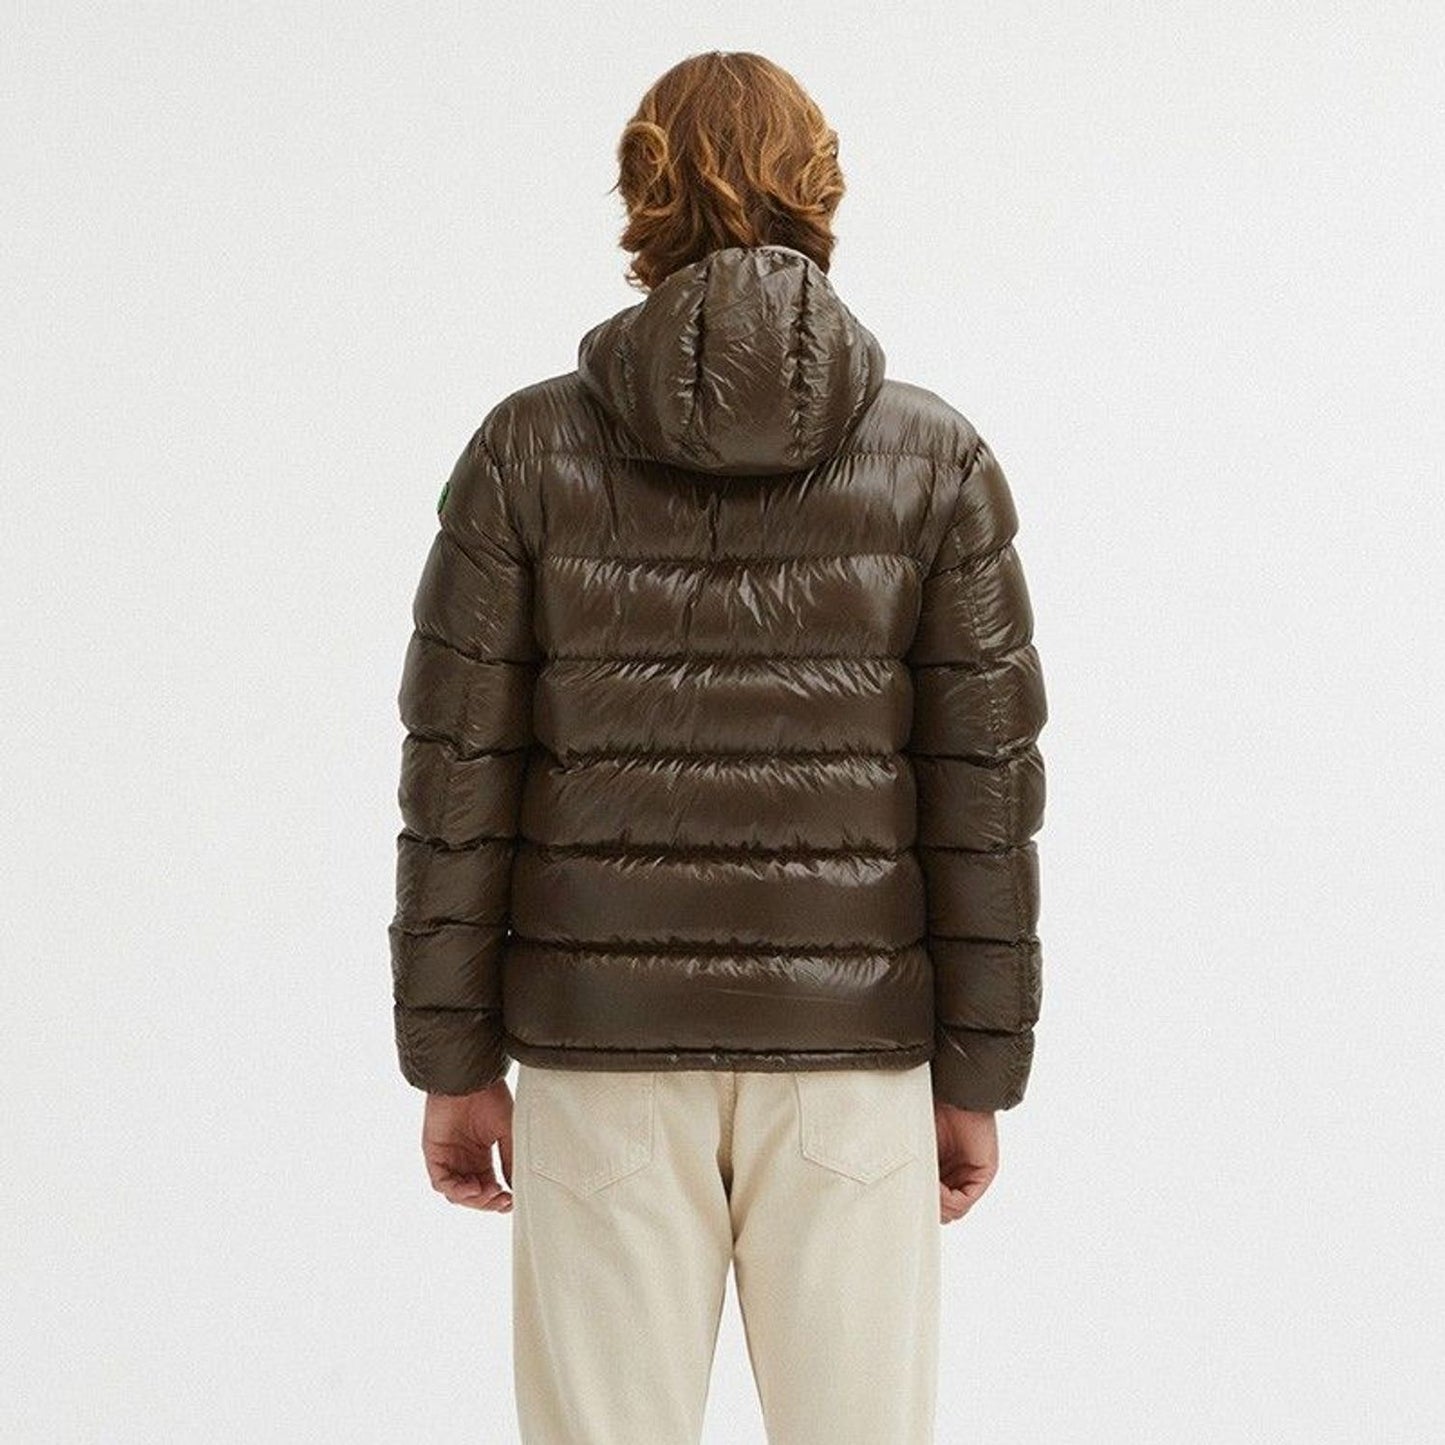 Centogrammi Reversible Hooded Jacket in Dove Grey and Brown gray-nylon-jacket-6 product-8579-2081943331-1c55cb57-b1b.jpg